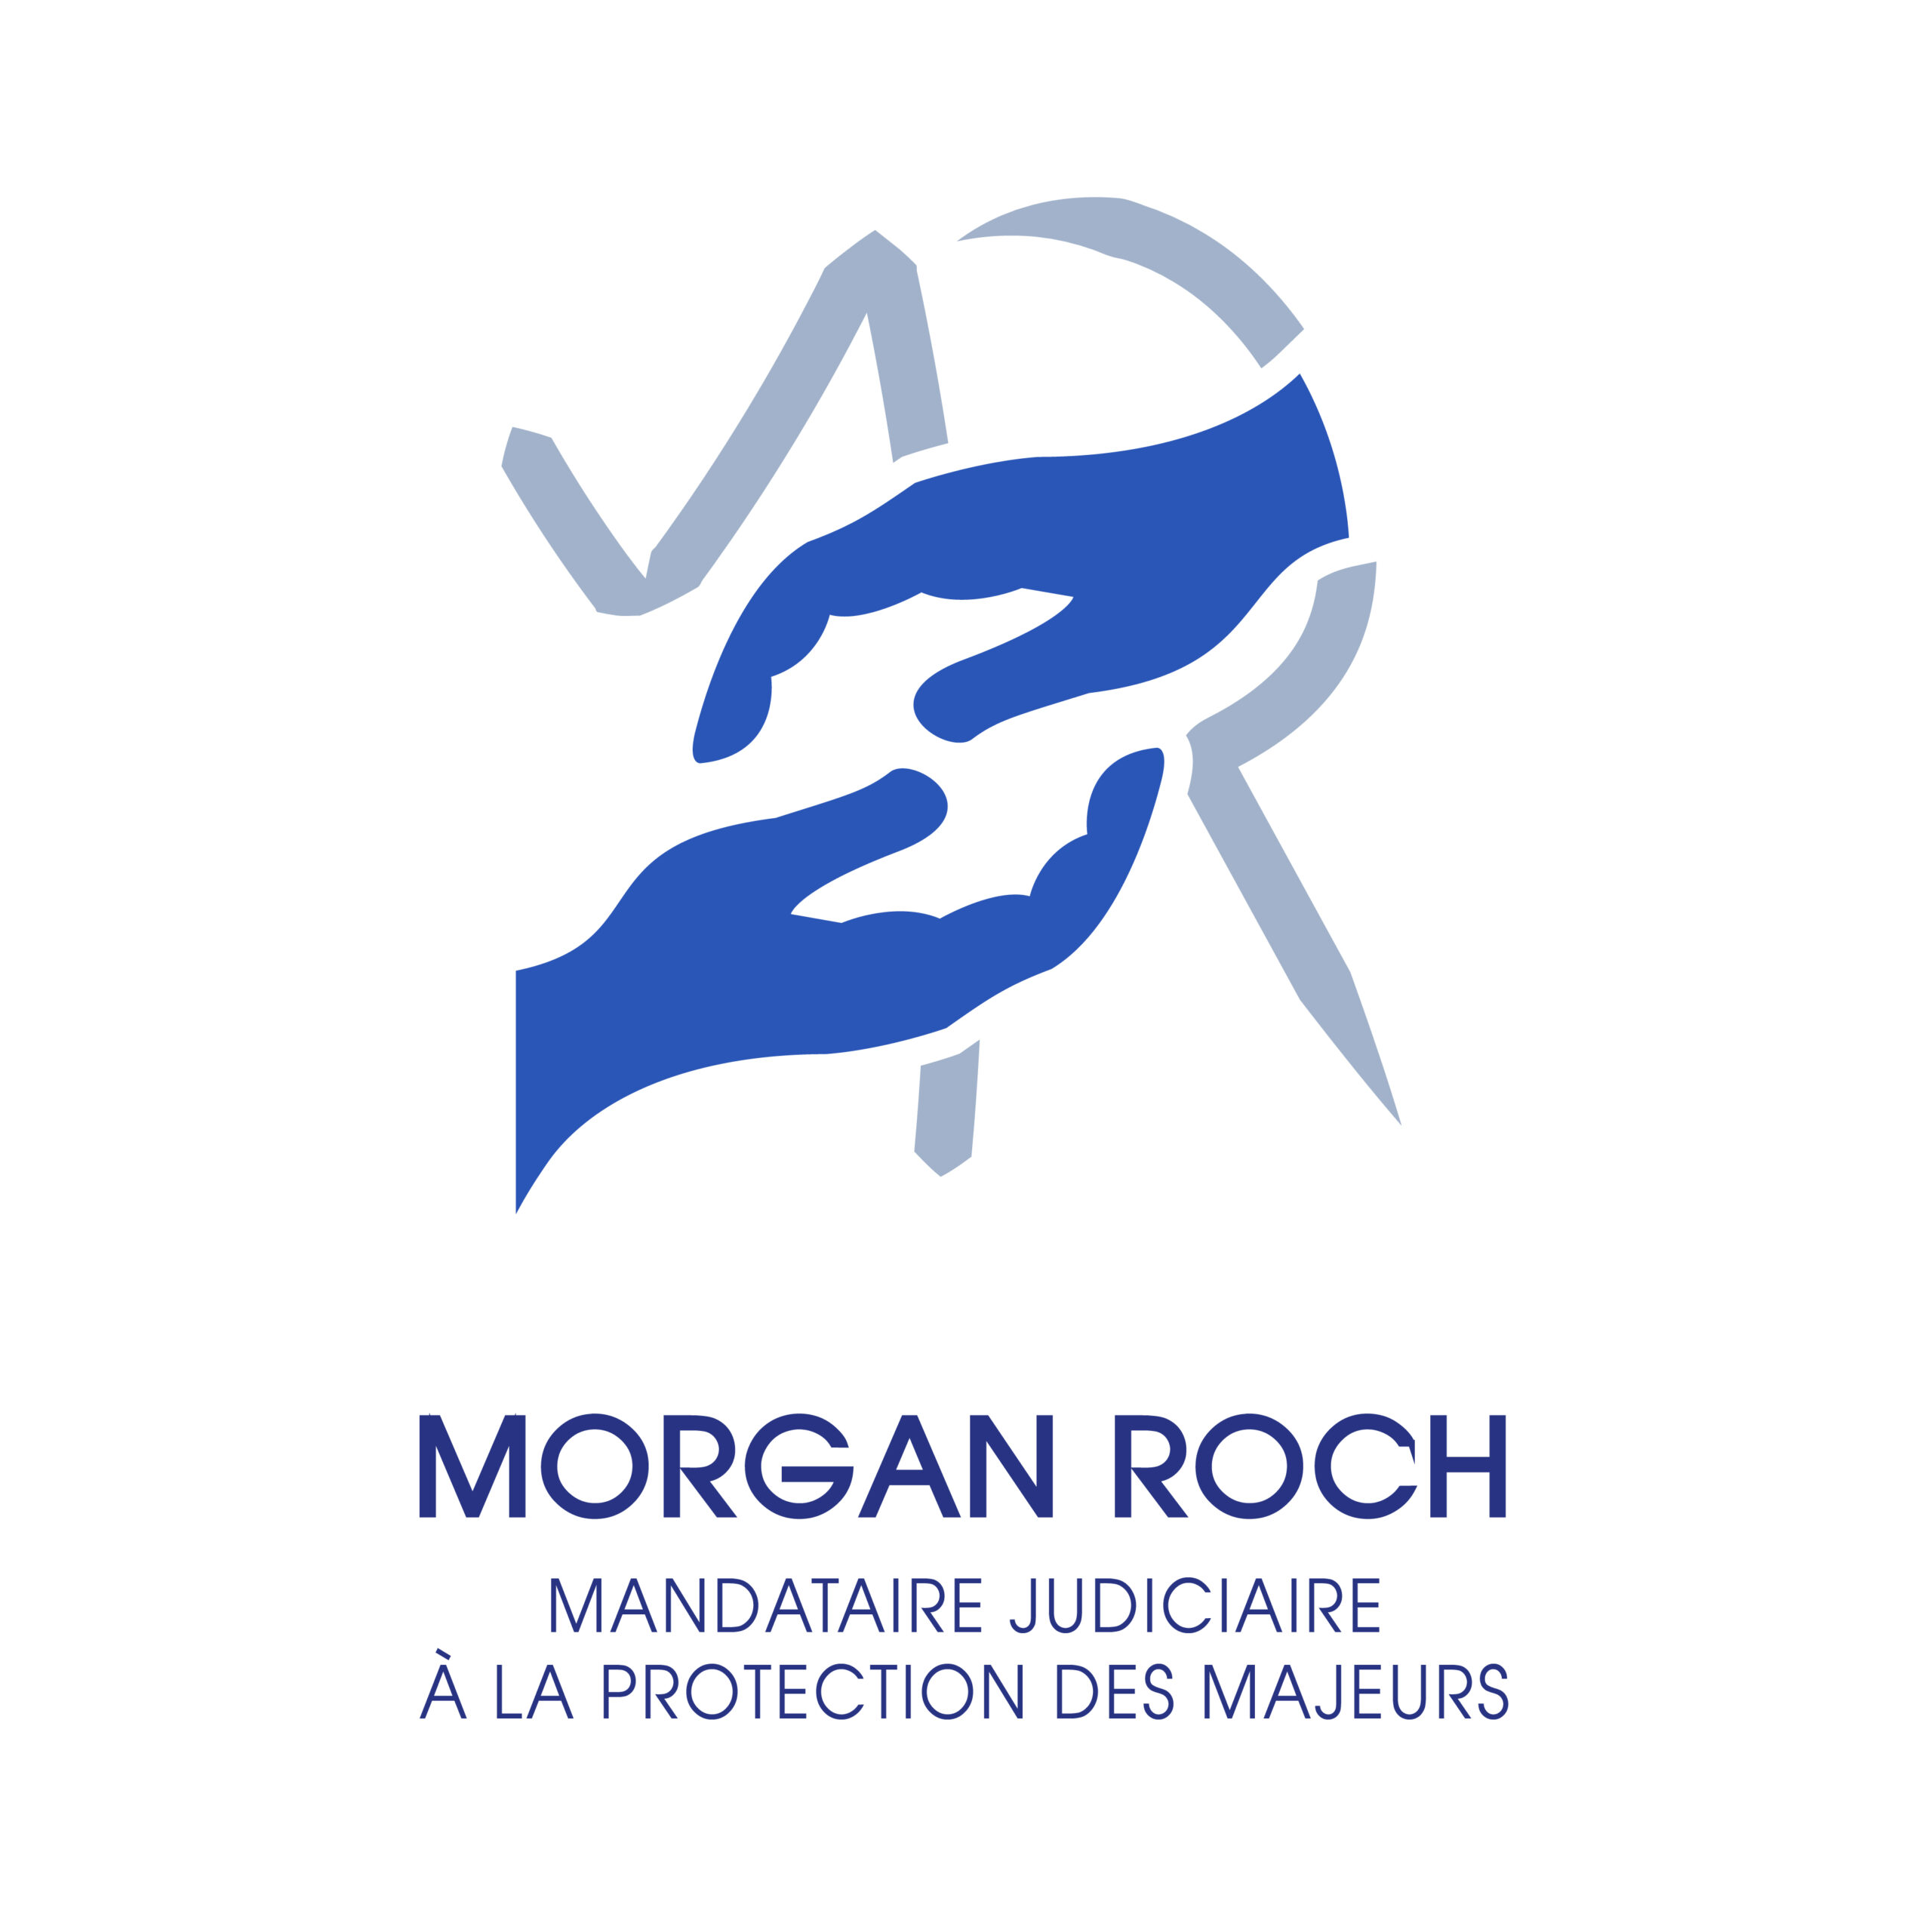 graphical-activity-logo-morgan-roch